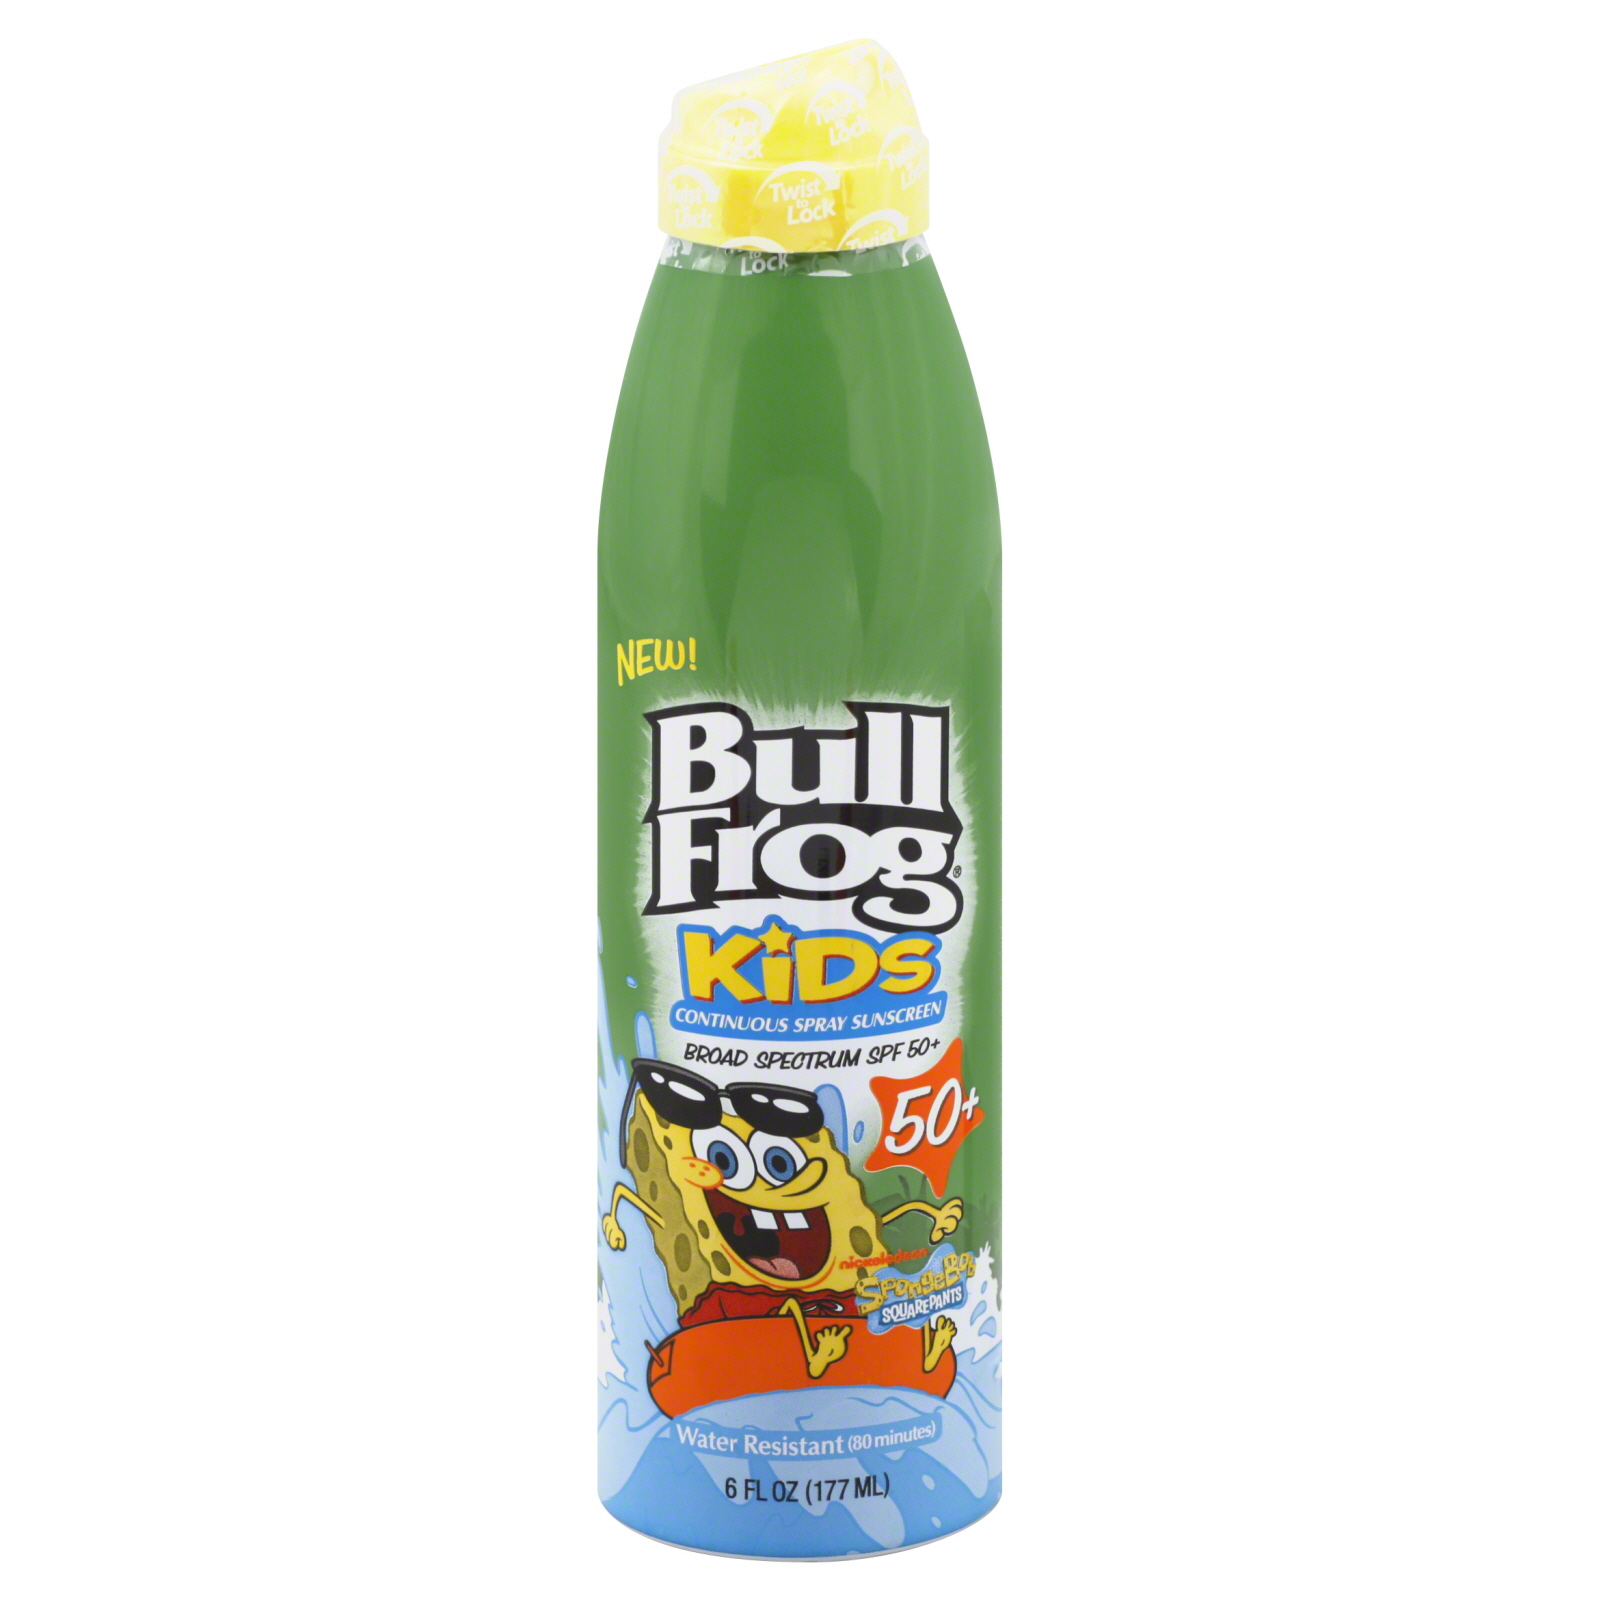 Bullfrog Kids Continuous Spray, SPF 50, 6 fl oz